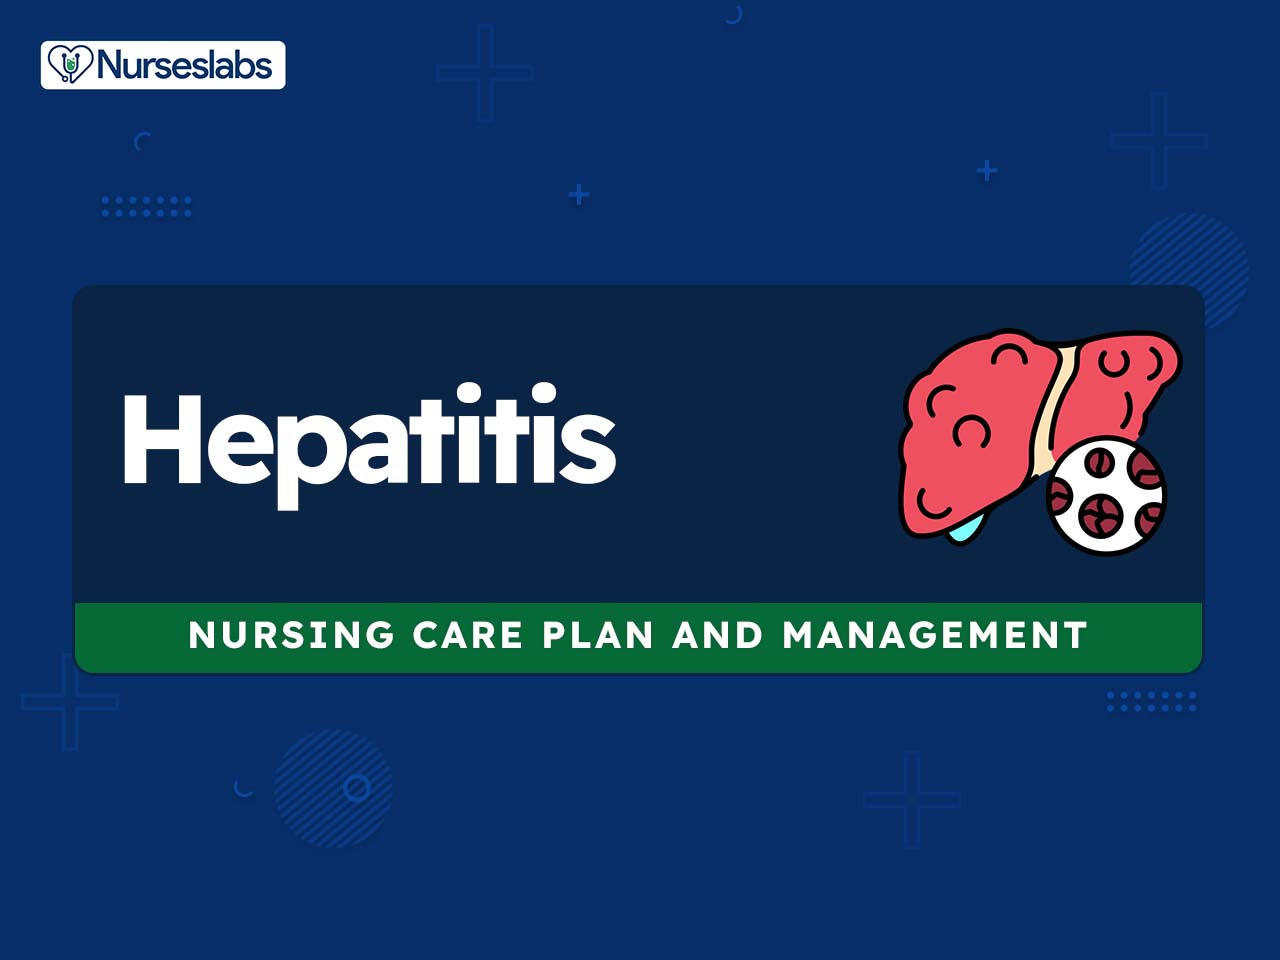 6 Hepatitis Nursing Care Plans - Nurseslabs